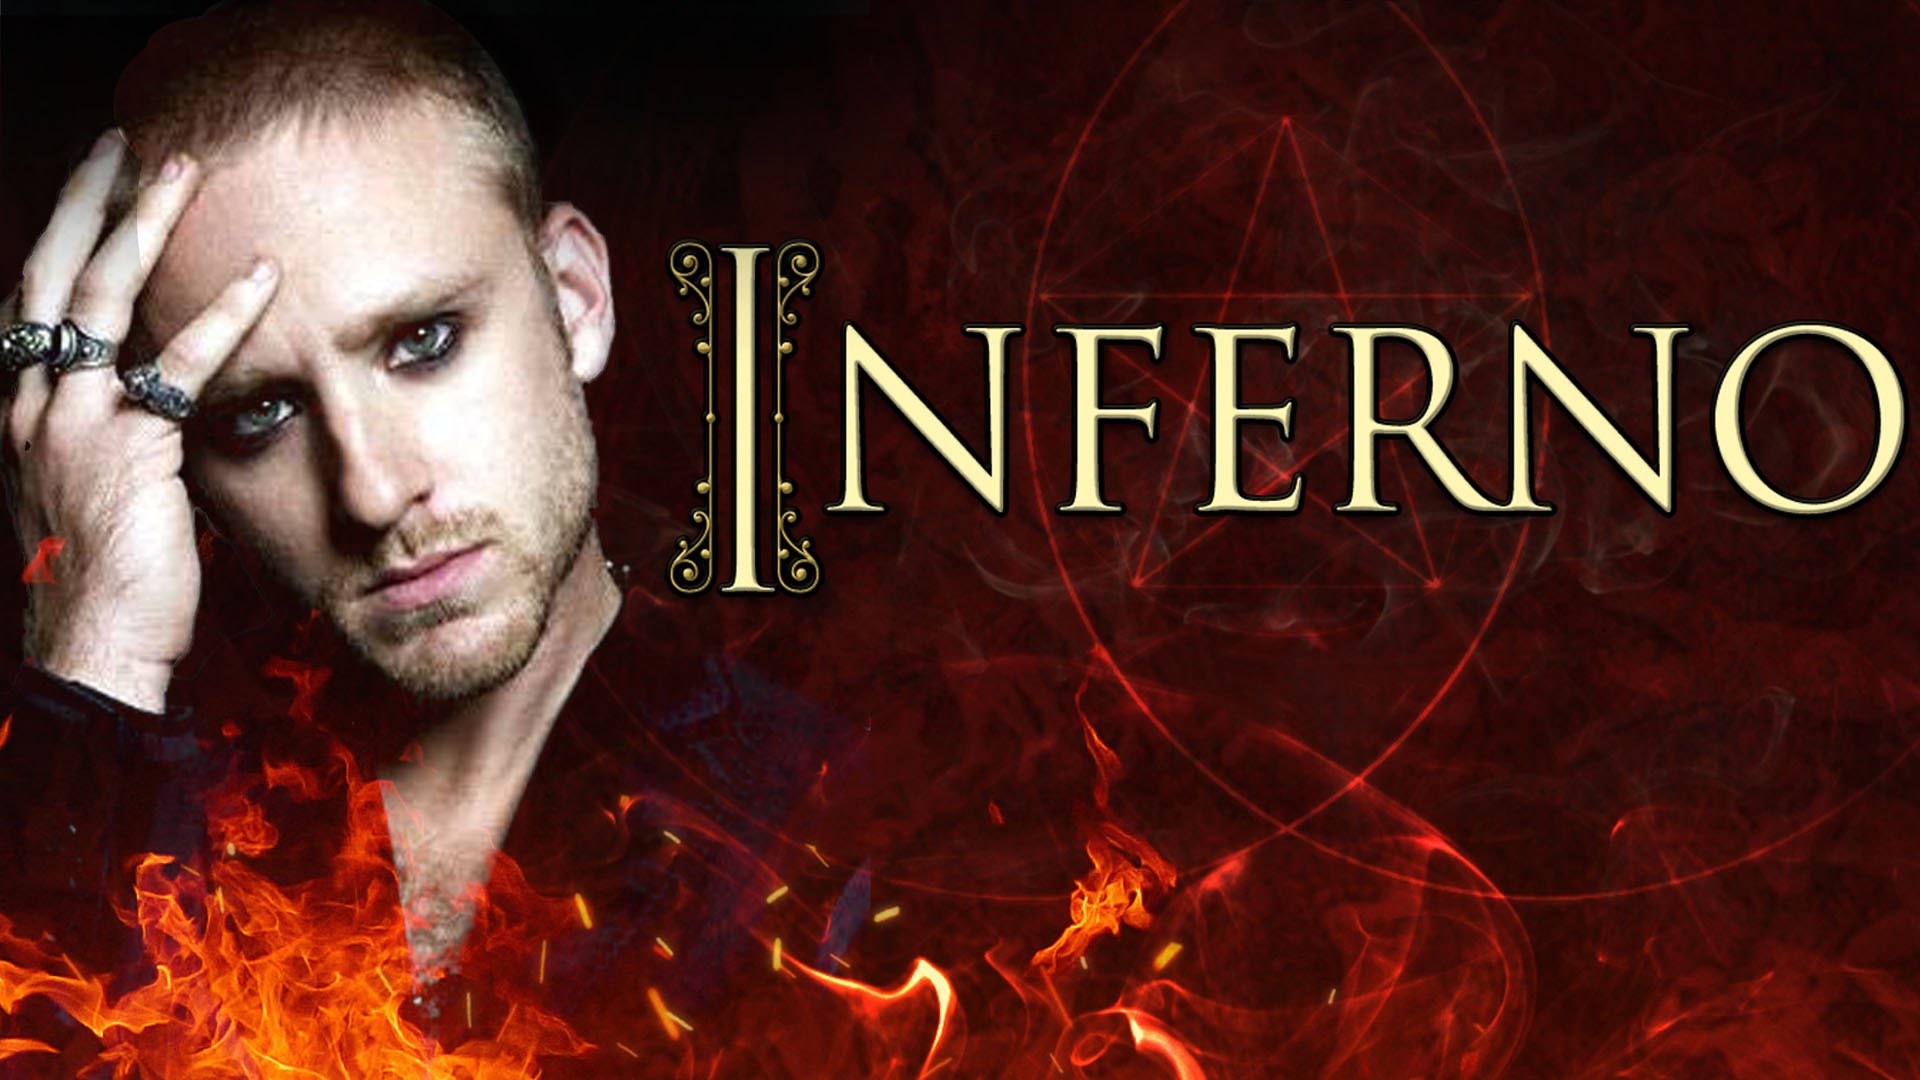 Full-Length Inferno Movie Watch 2016 Online